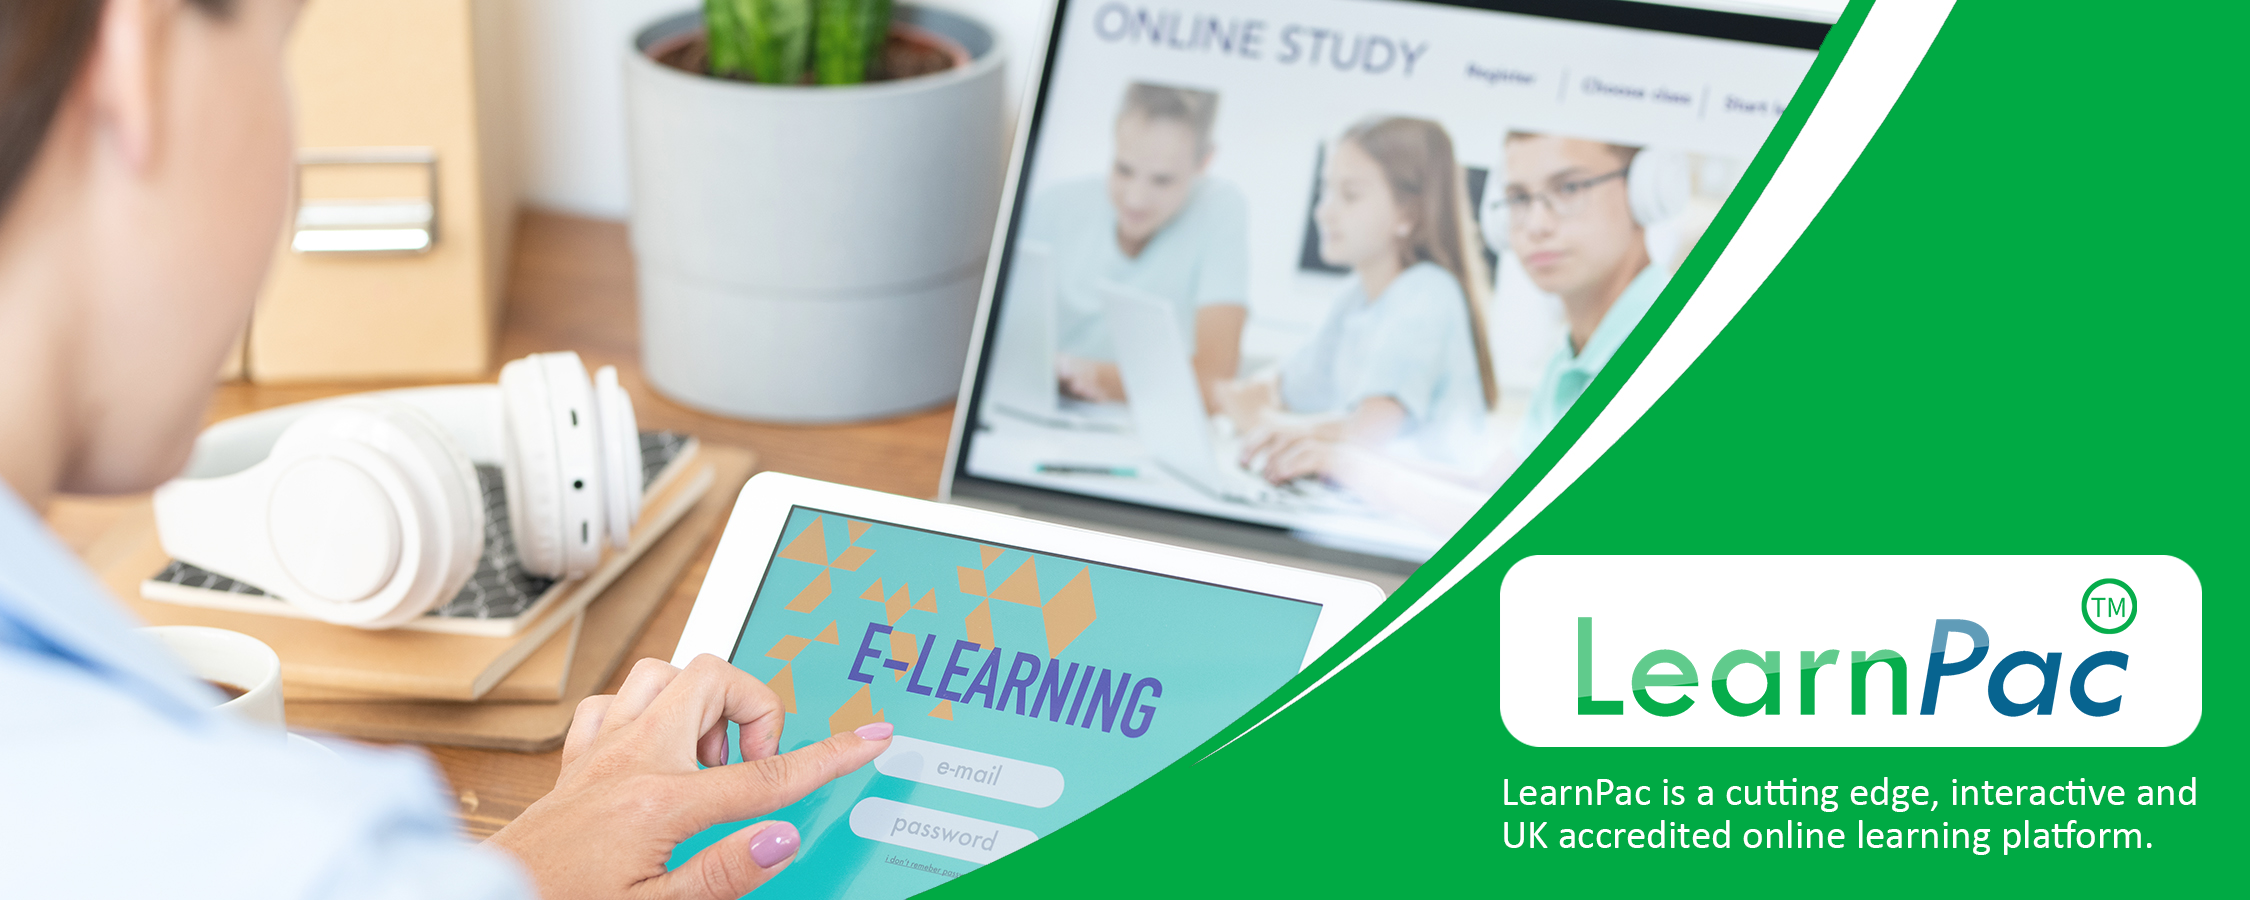 Employee Recruitment Training - Online Learning Courses - E-Learning Courses - LearnPac Systems UK -